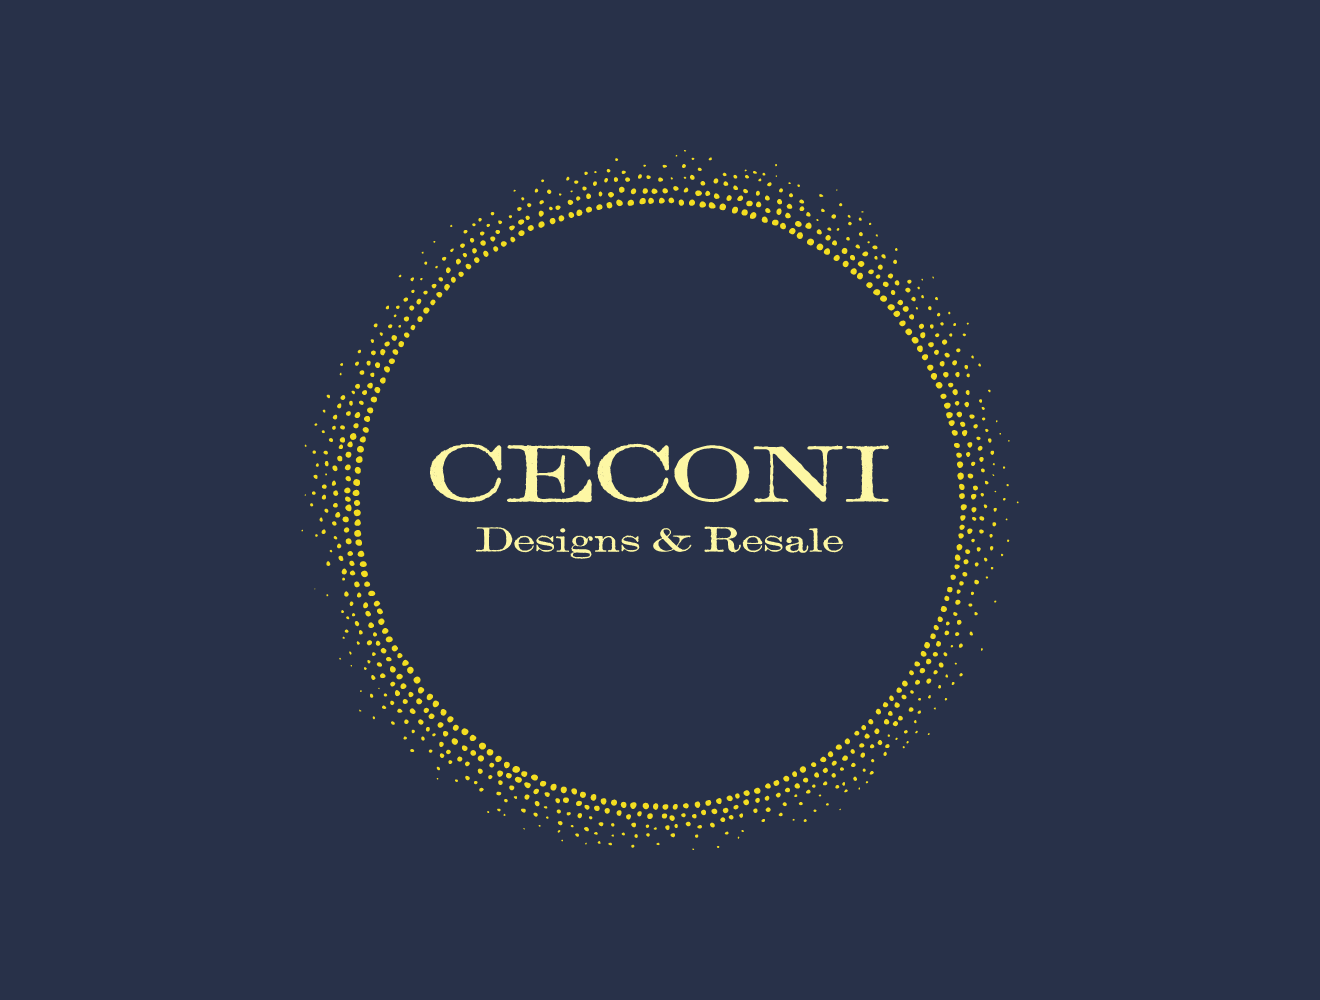 Ceconi Designs and Resale | AuctionNinja